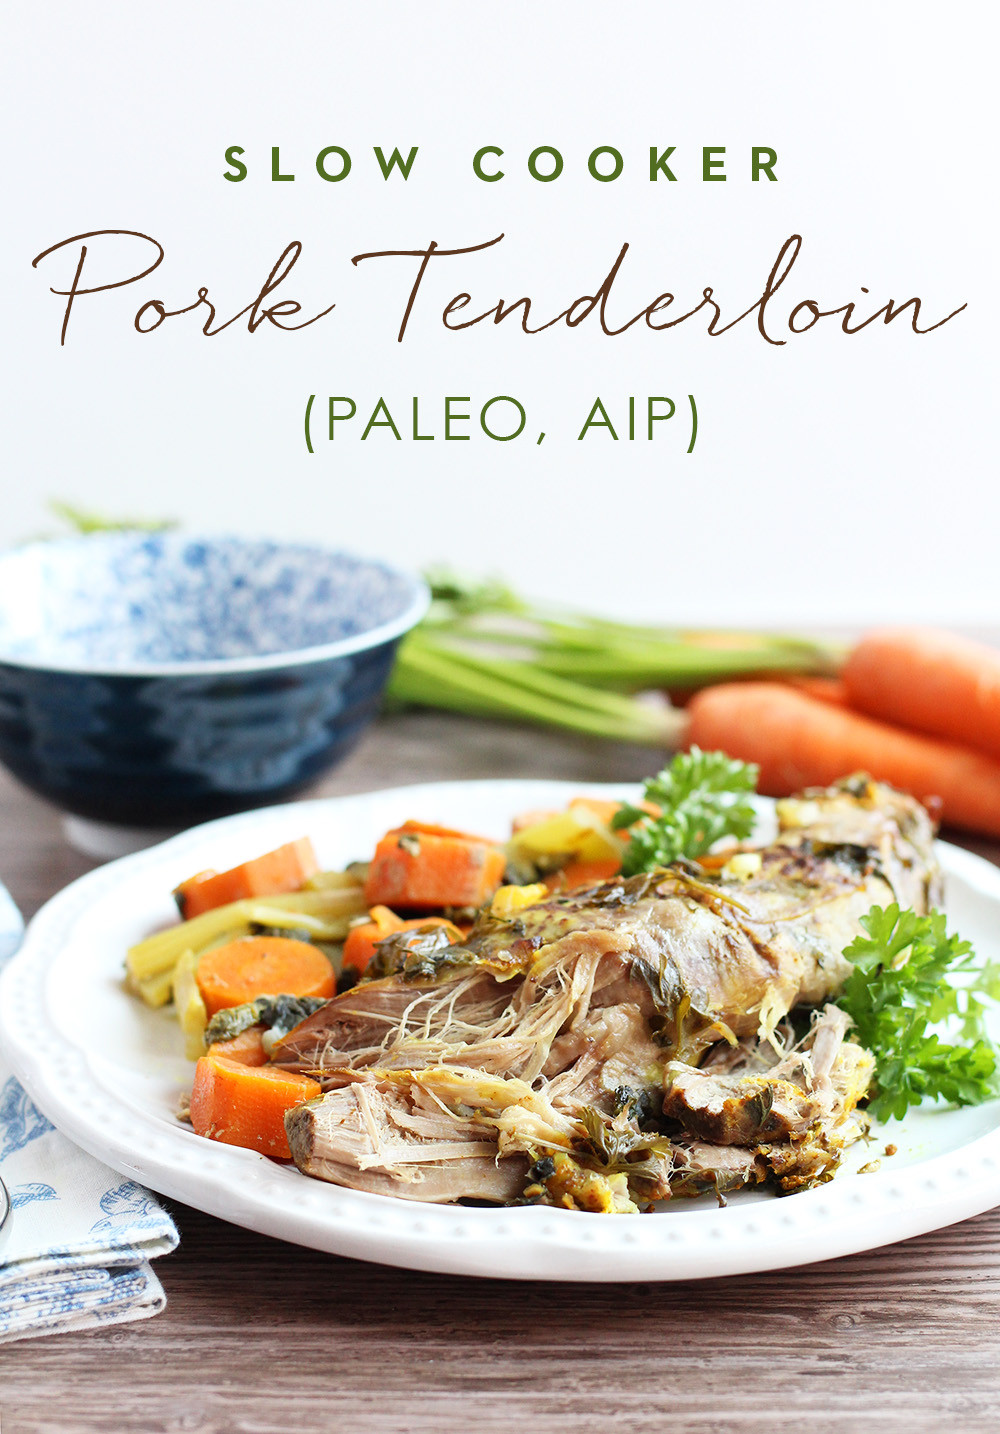 Healthy Pork Tenderloin Recipes Slow Cooker
 Slow Cooker Pork Tenderloin Paleo AIP Whole30